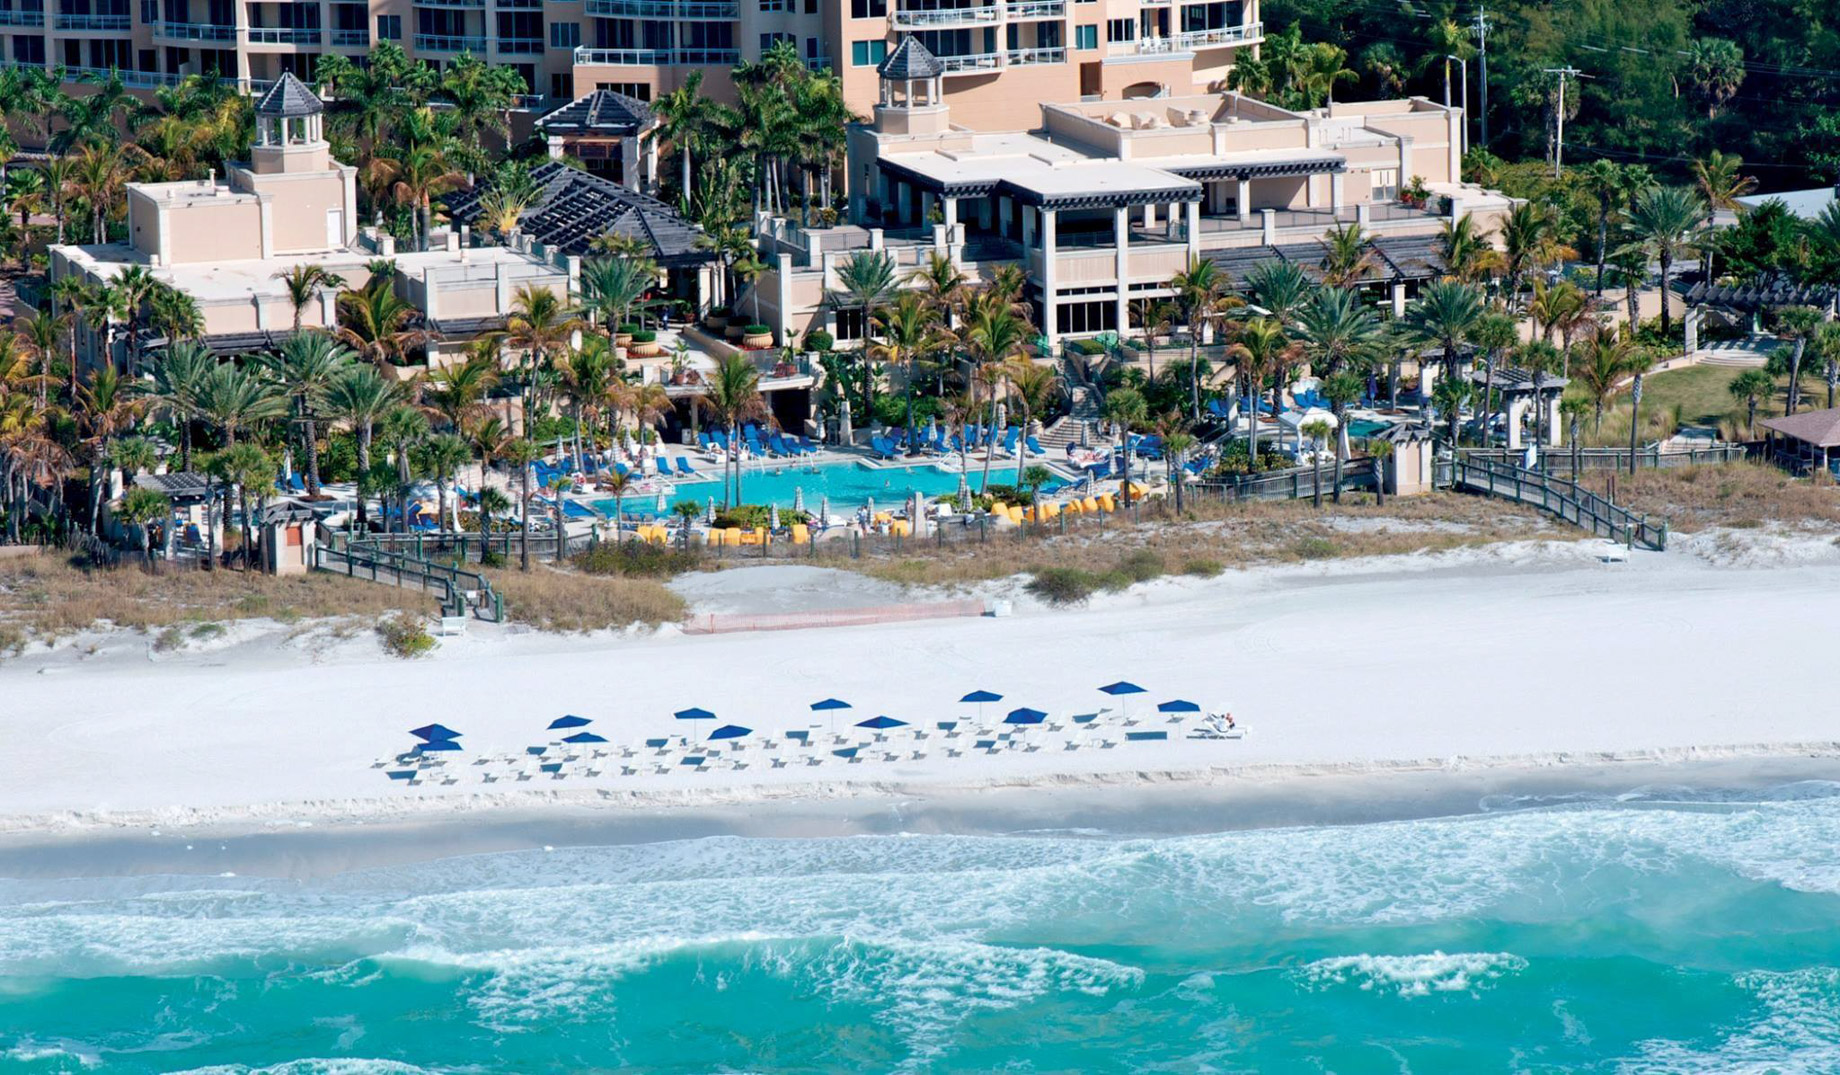 The Ritz-Carlton Beach Club Resort - Lido Key, Sarasota, FL, USA - Aerial Beach View